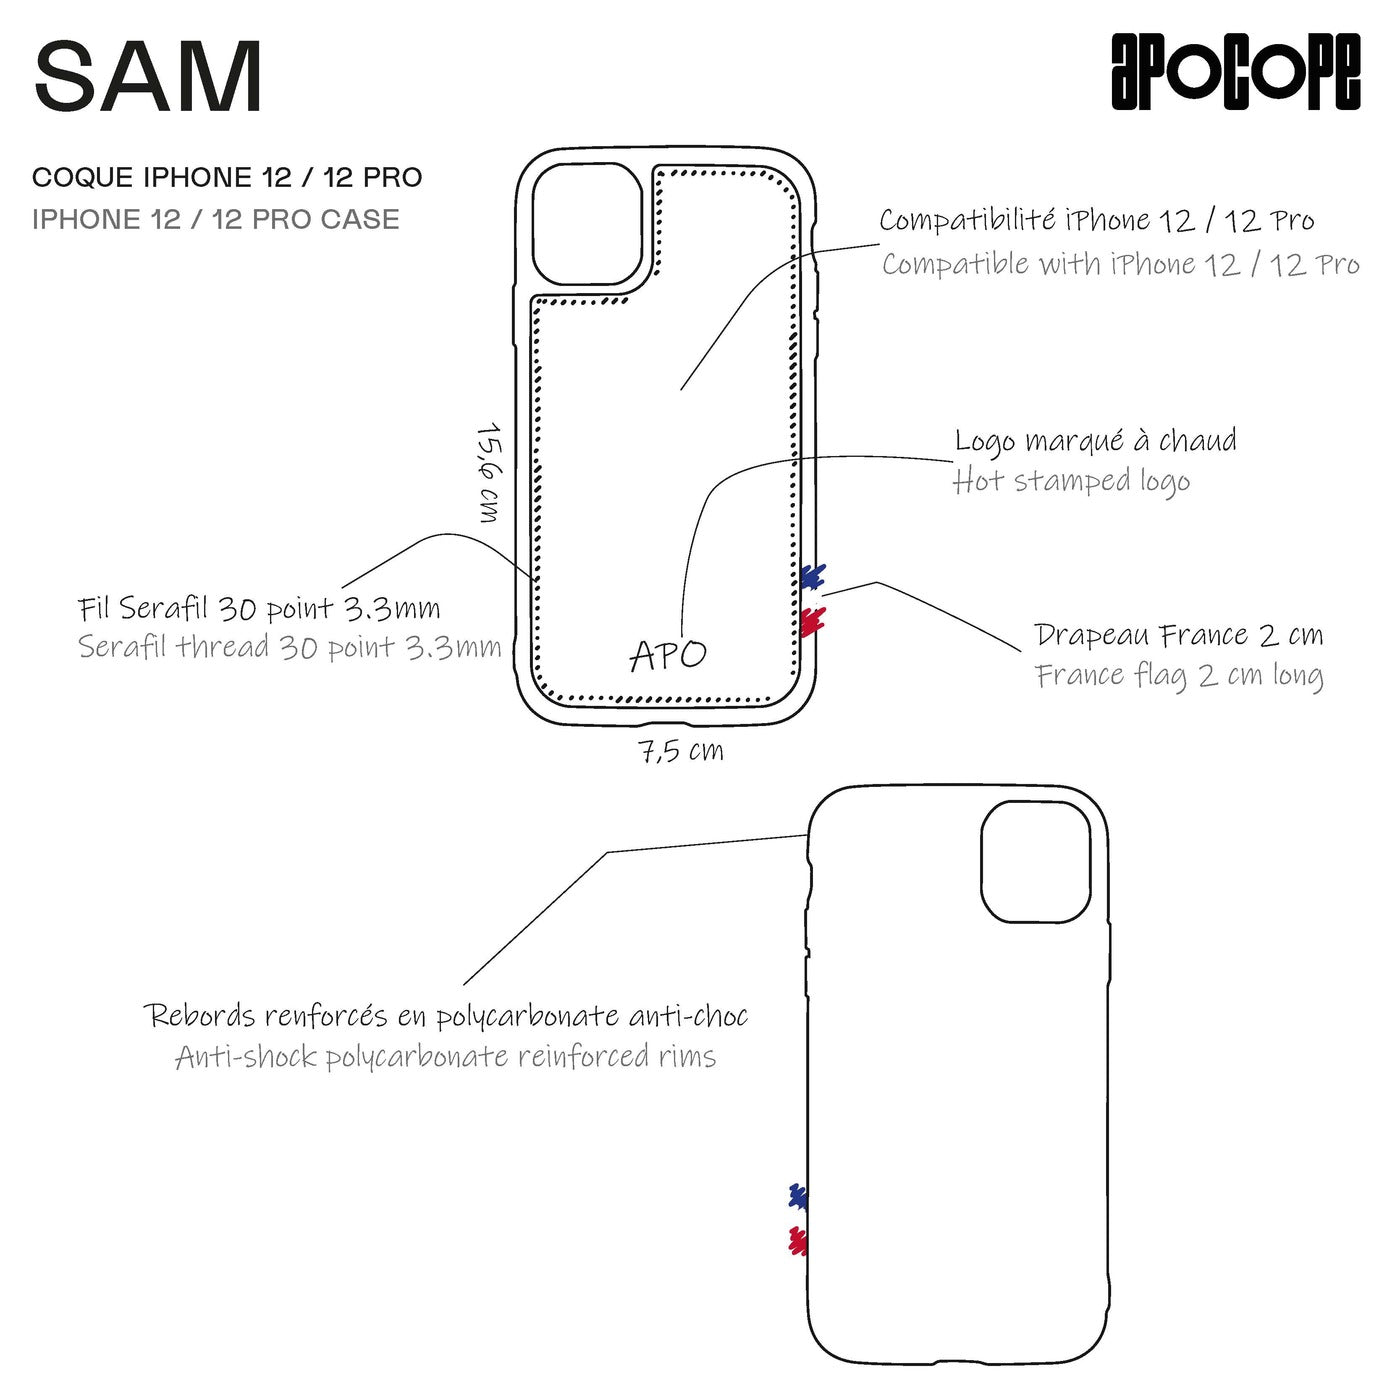 SAM - Coque iPhone 12 / 12 Pro en liège - Naturel